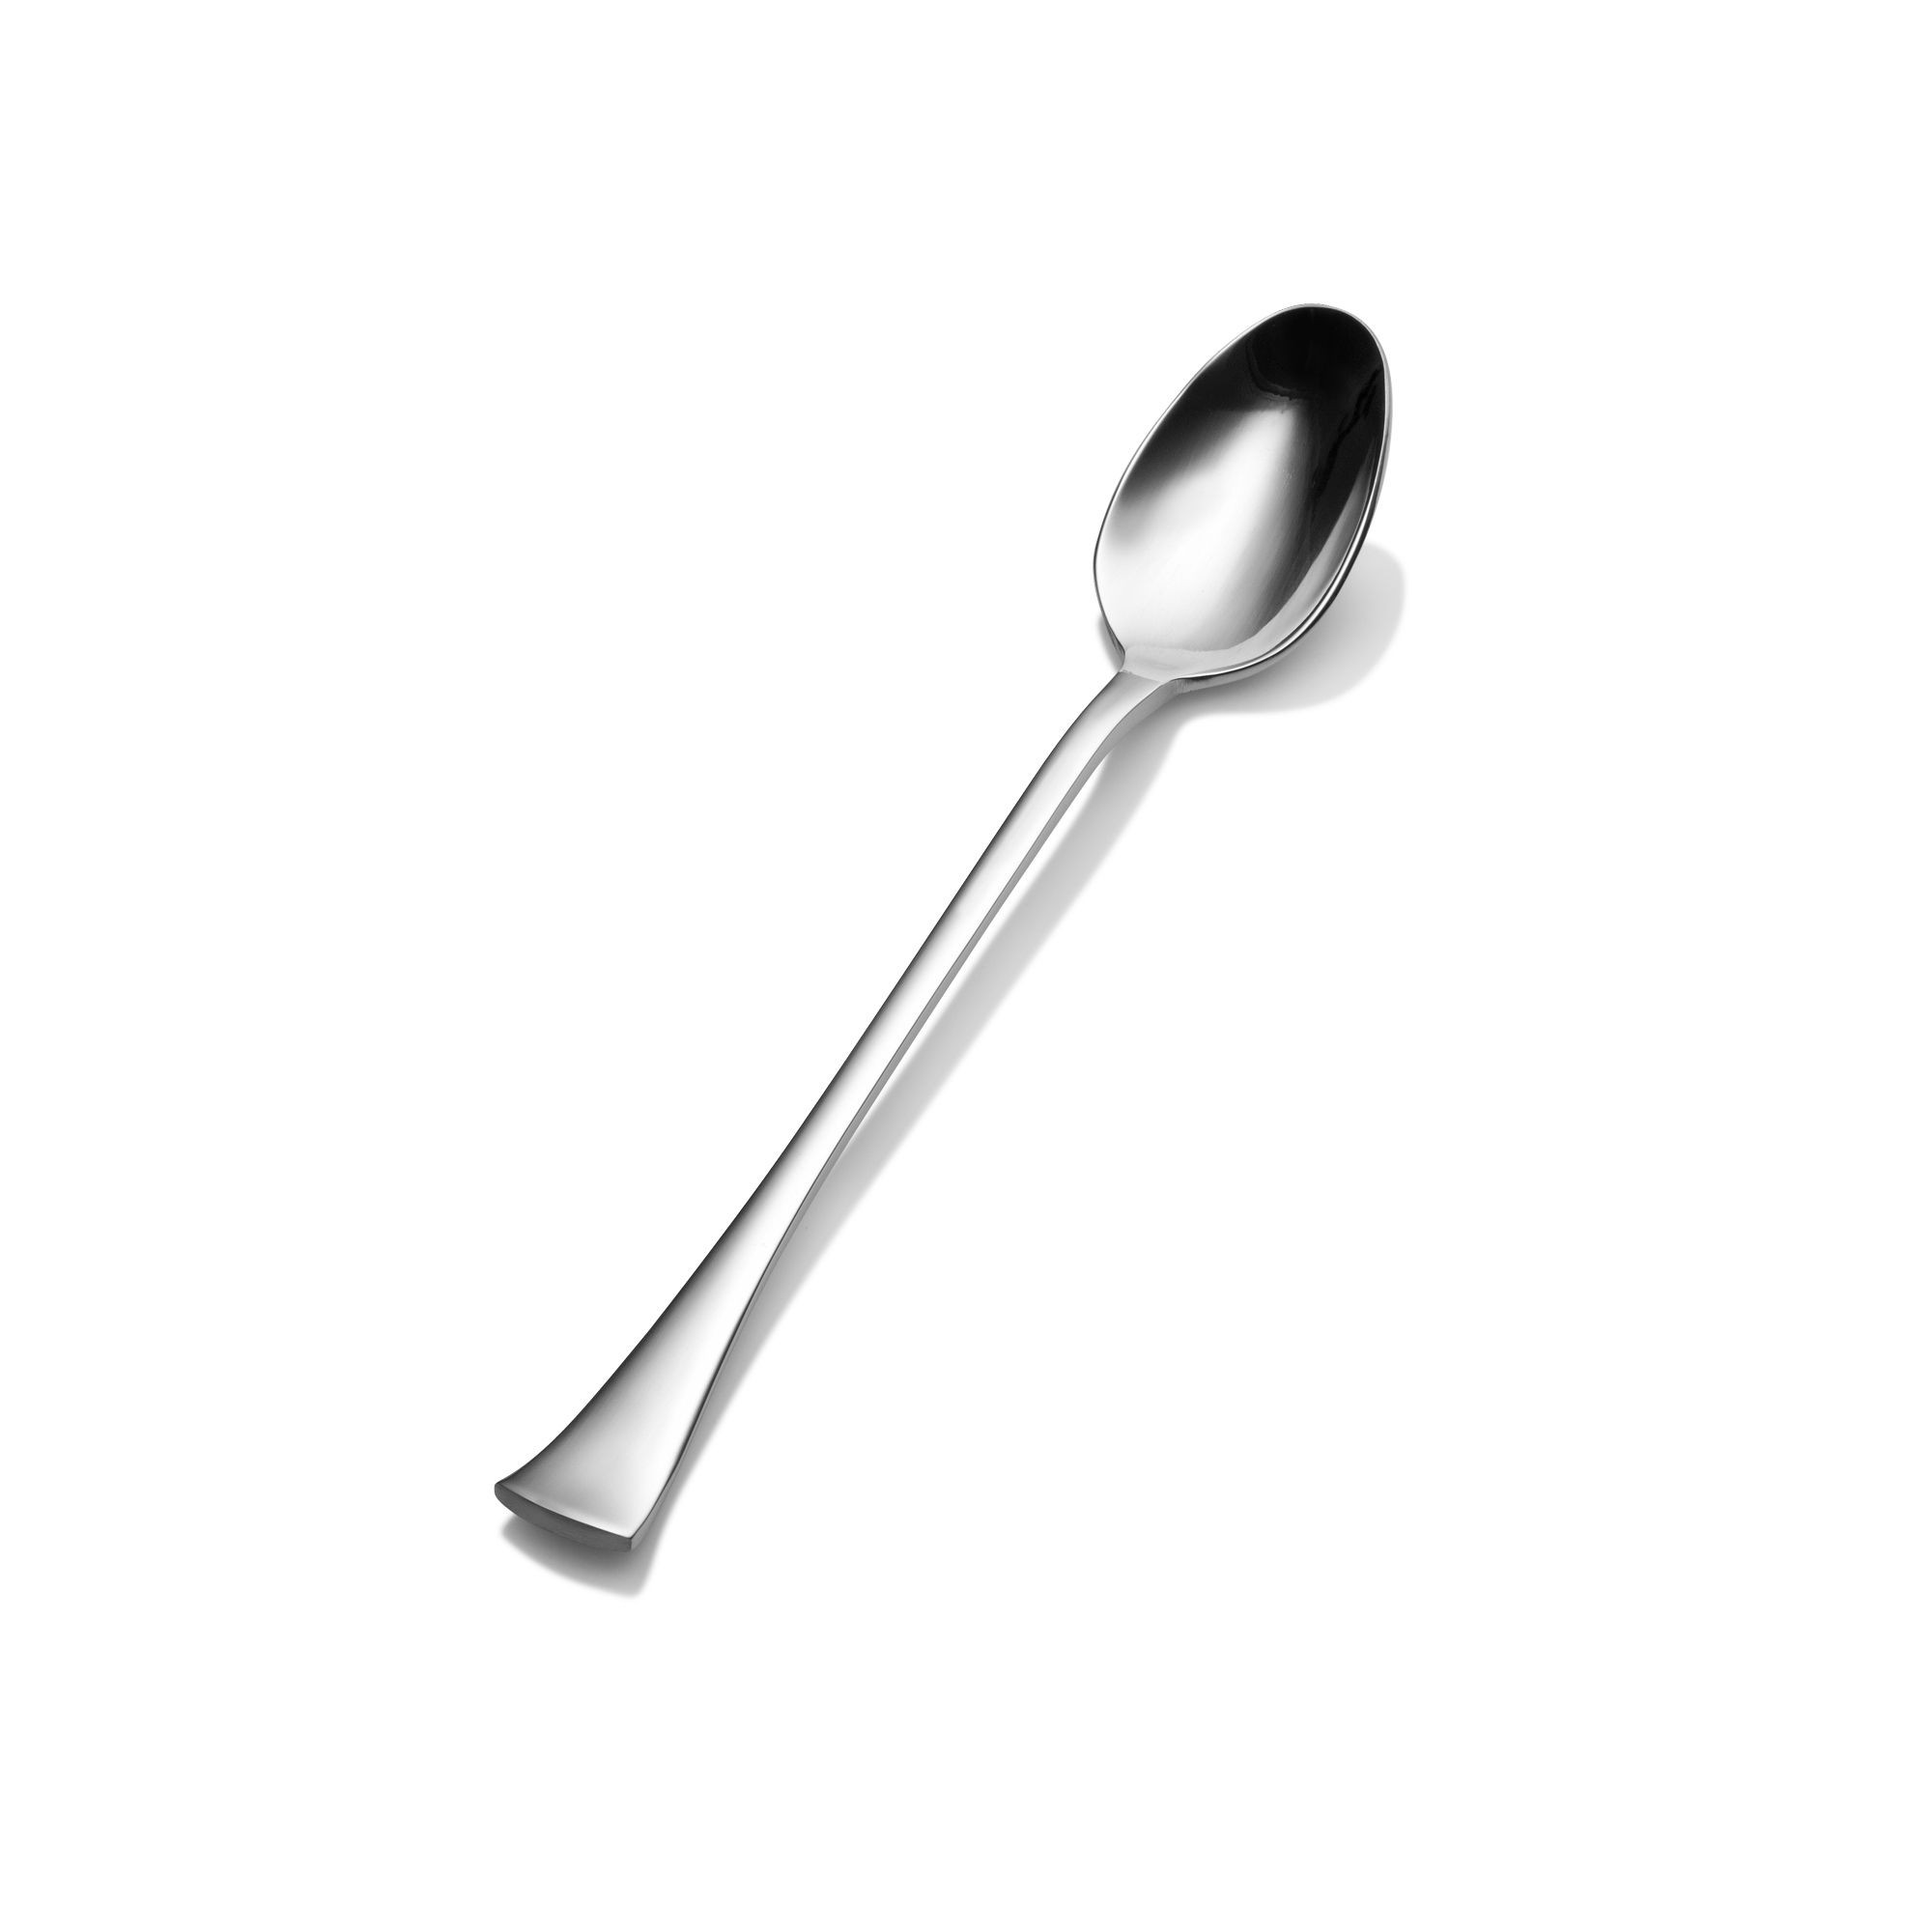 Bon Chef S3202 Aspen 18/8 Stainless Steel Iced Tea Spoon